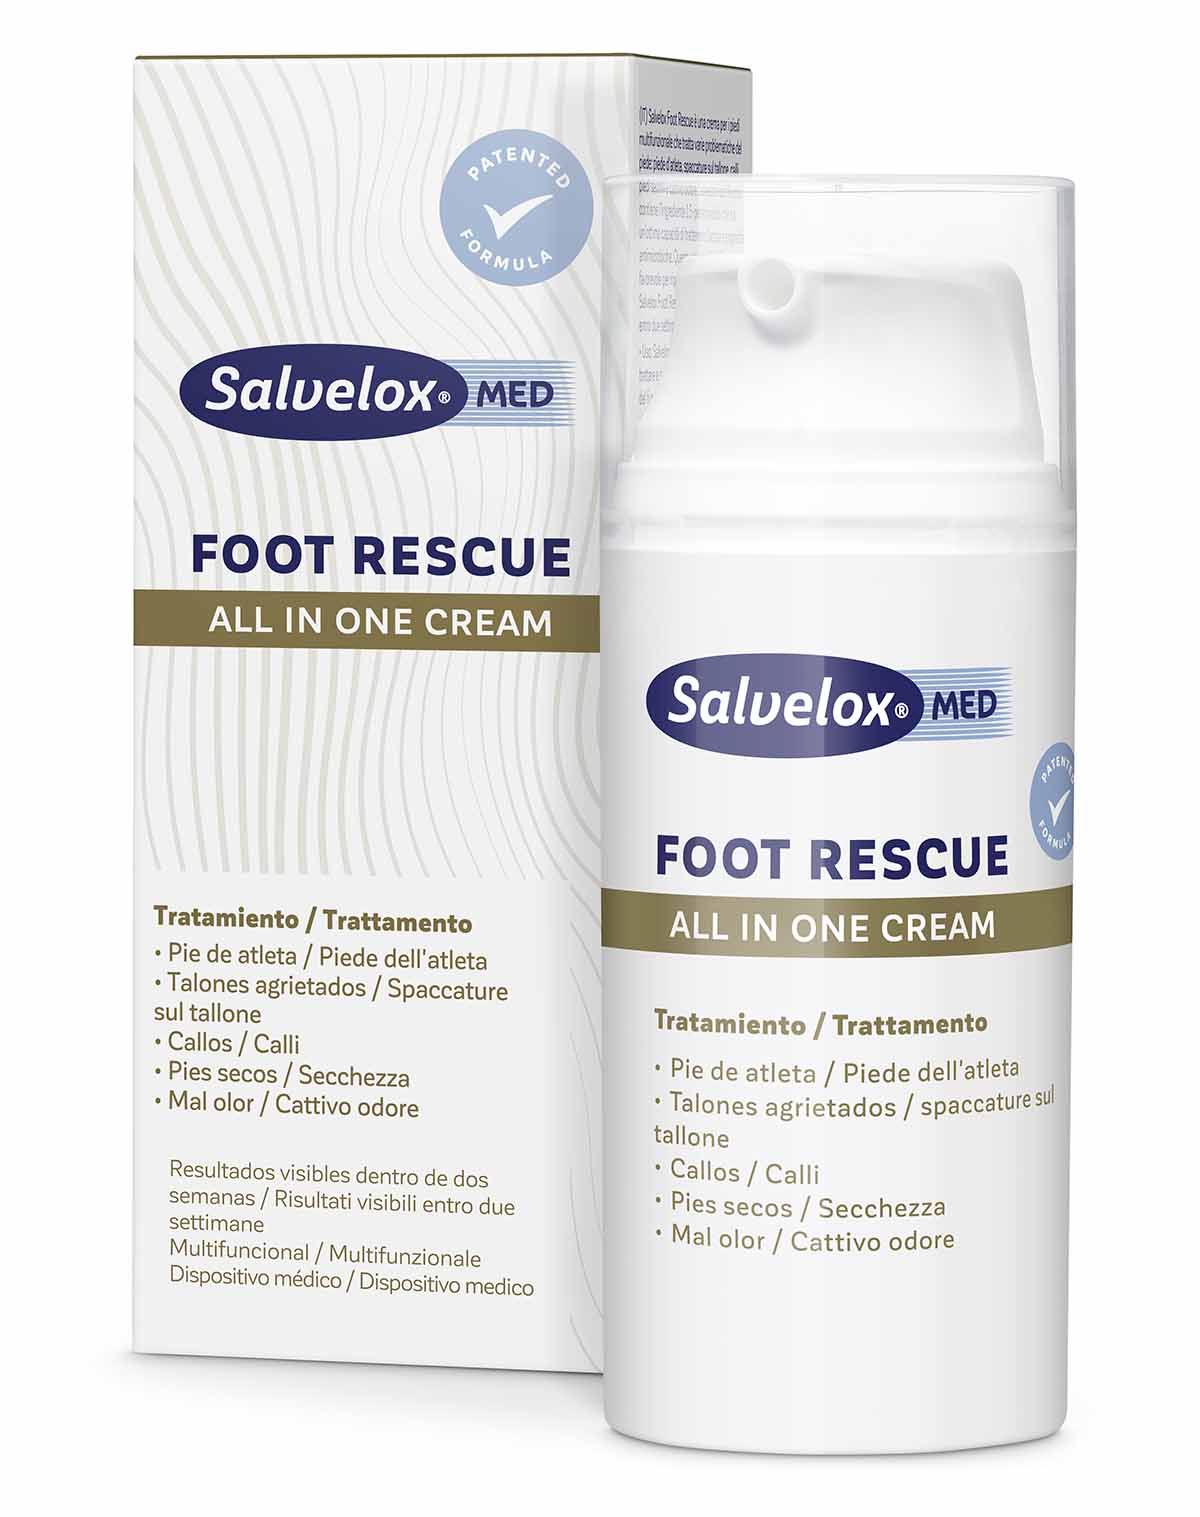 Salvelox Foot Rescue All in One Cream 22,95 euros